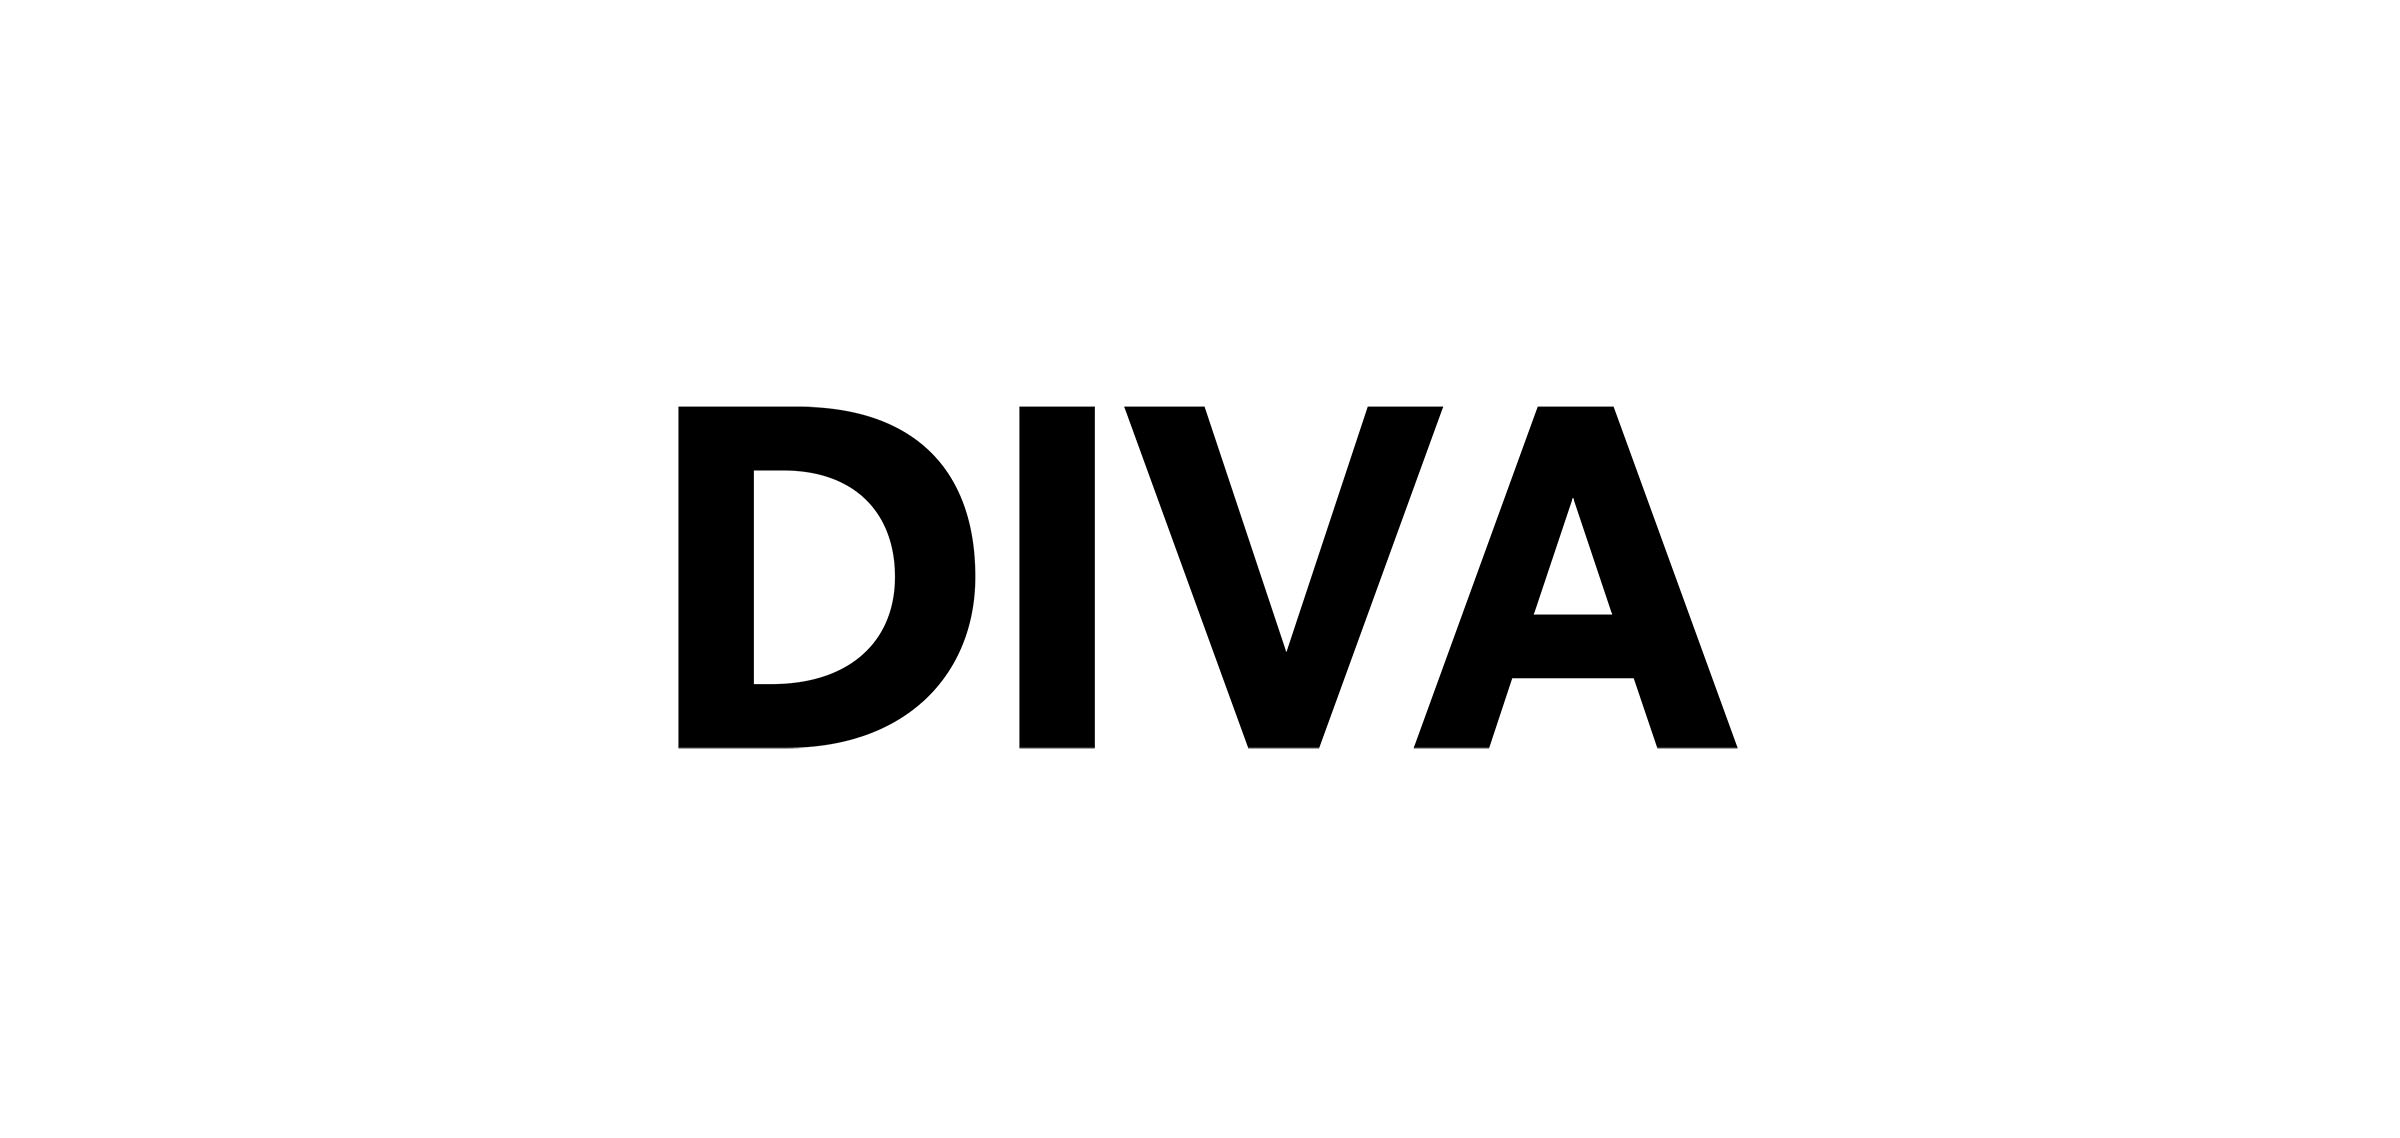 DIVA Magazine